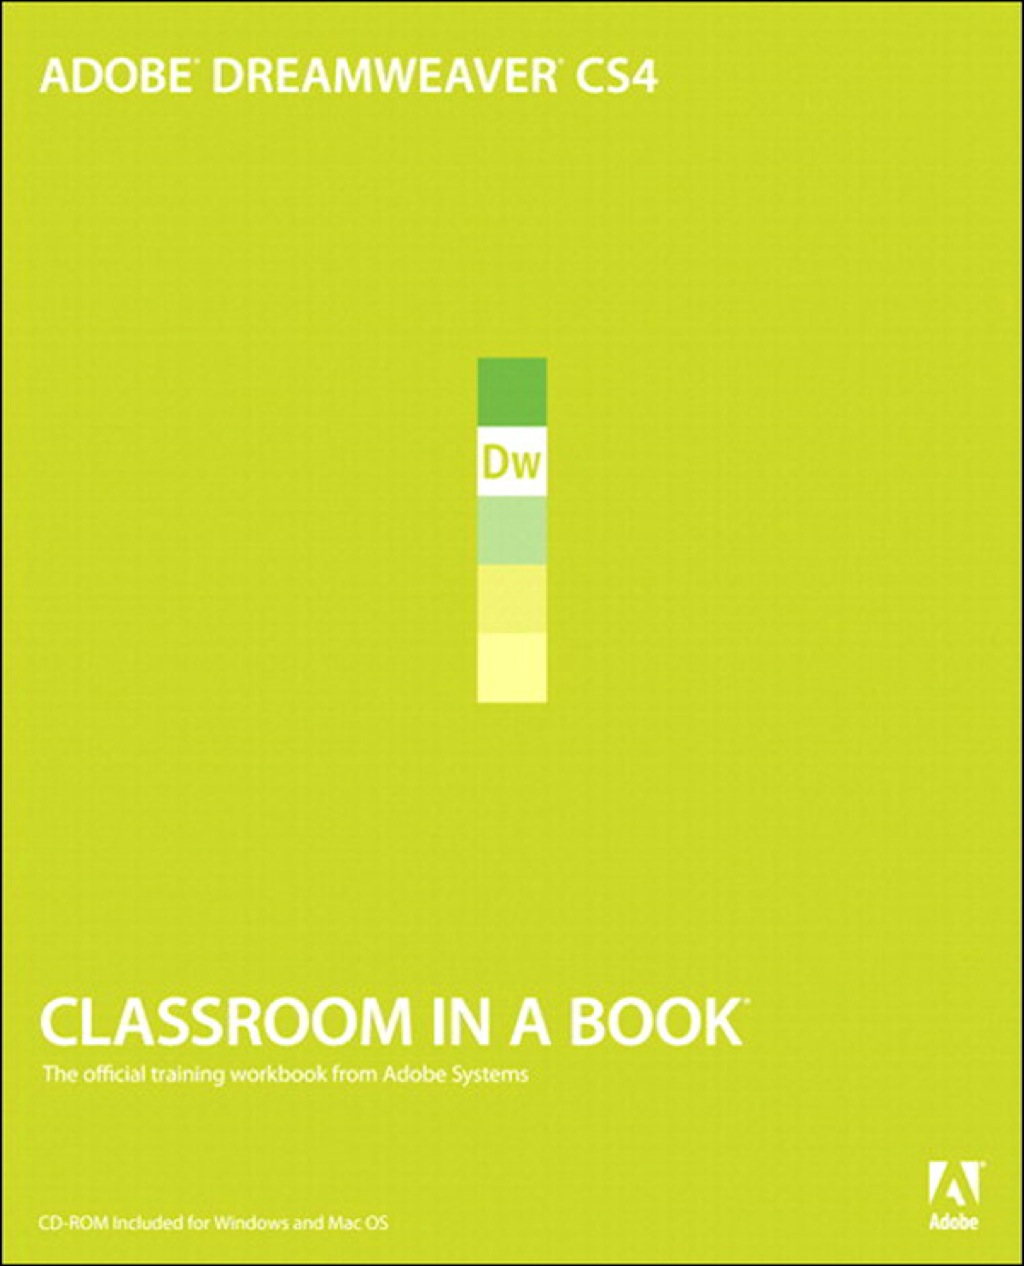 Adobe Dreamweaver CS4 Classroom in a Book (eBook) - Adobe Creative Team